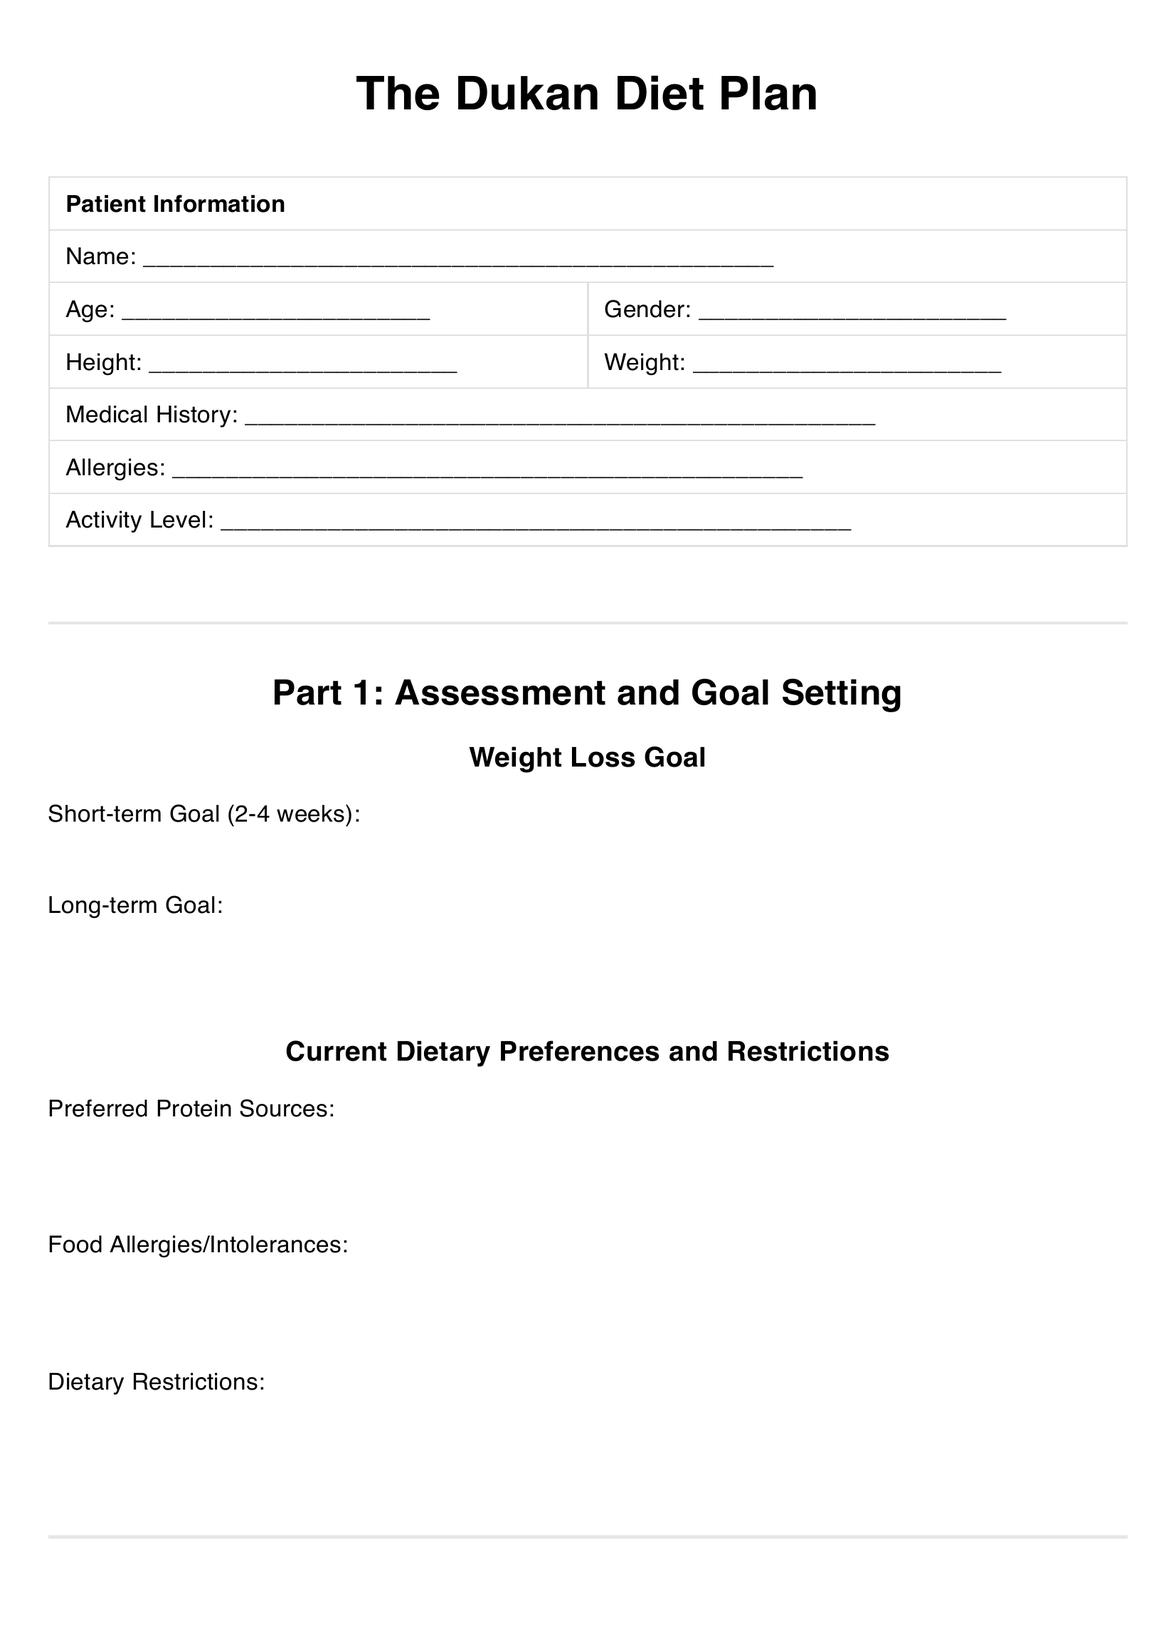 The Dukan Diet Plan PDF Example